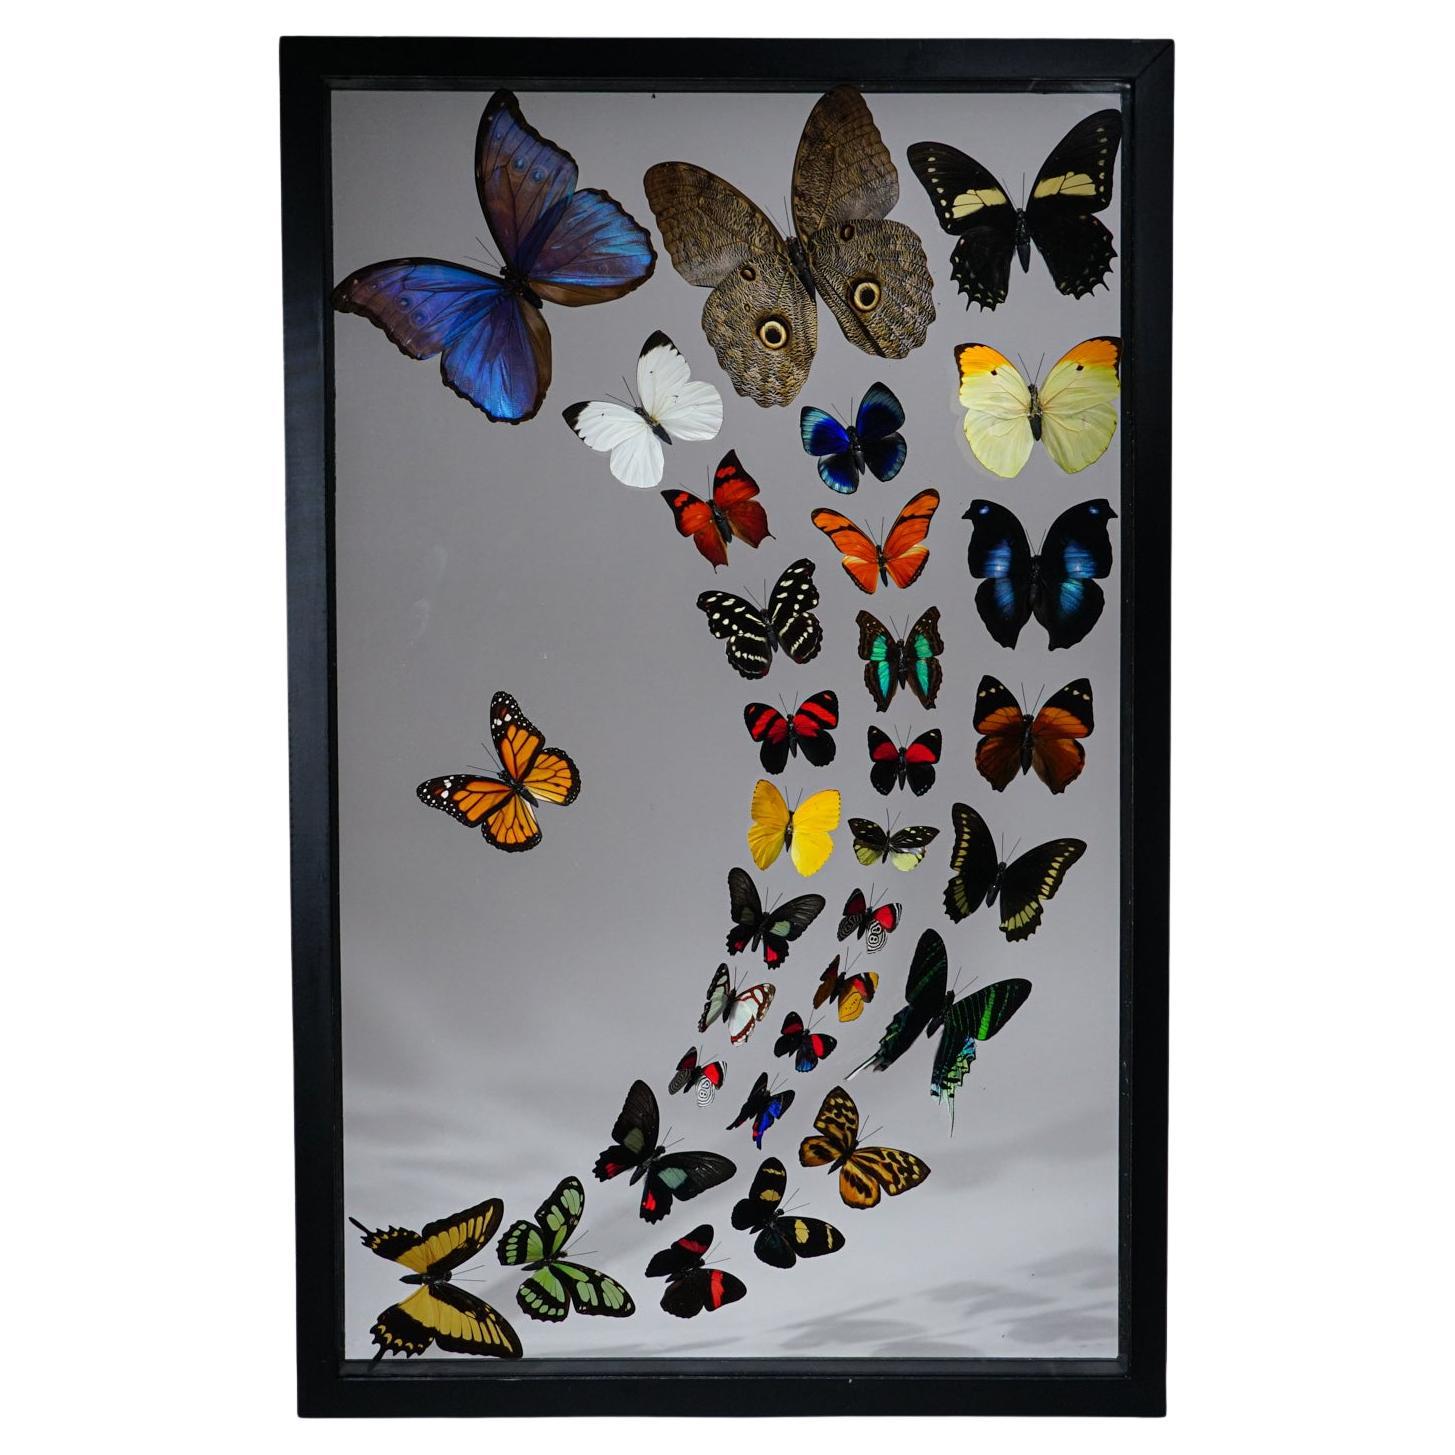 Genuine Butterflies Specimen in Black Display Frame '32 Butterflies'